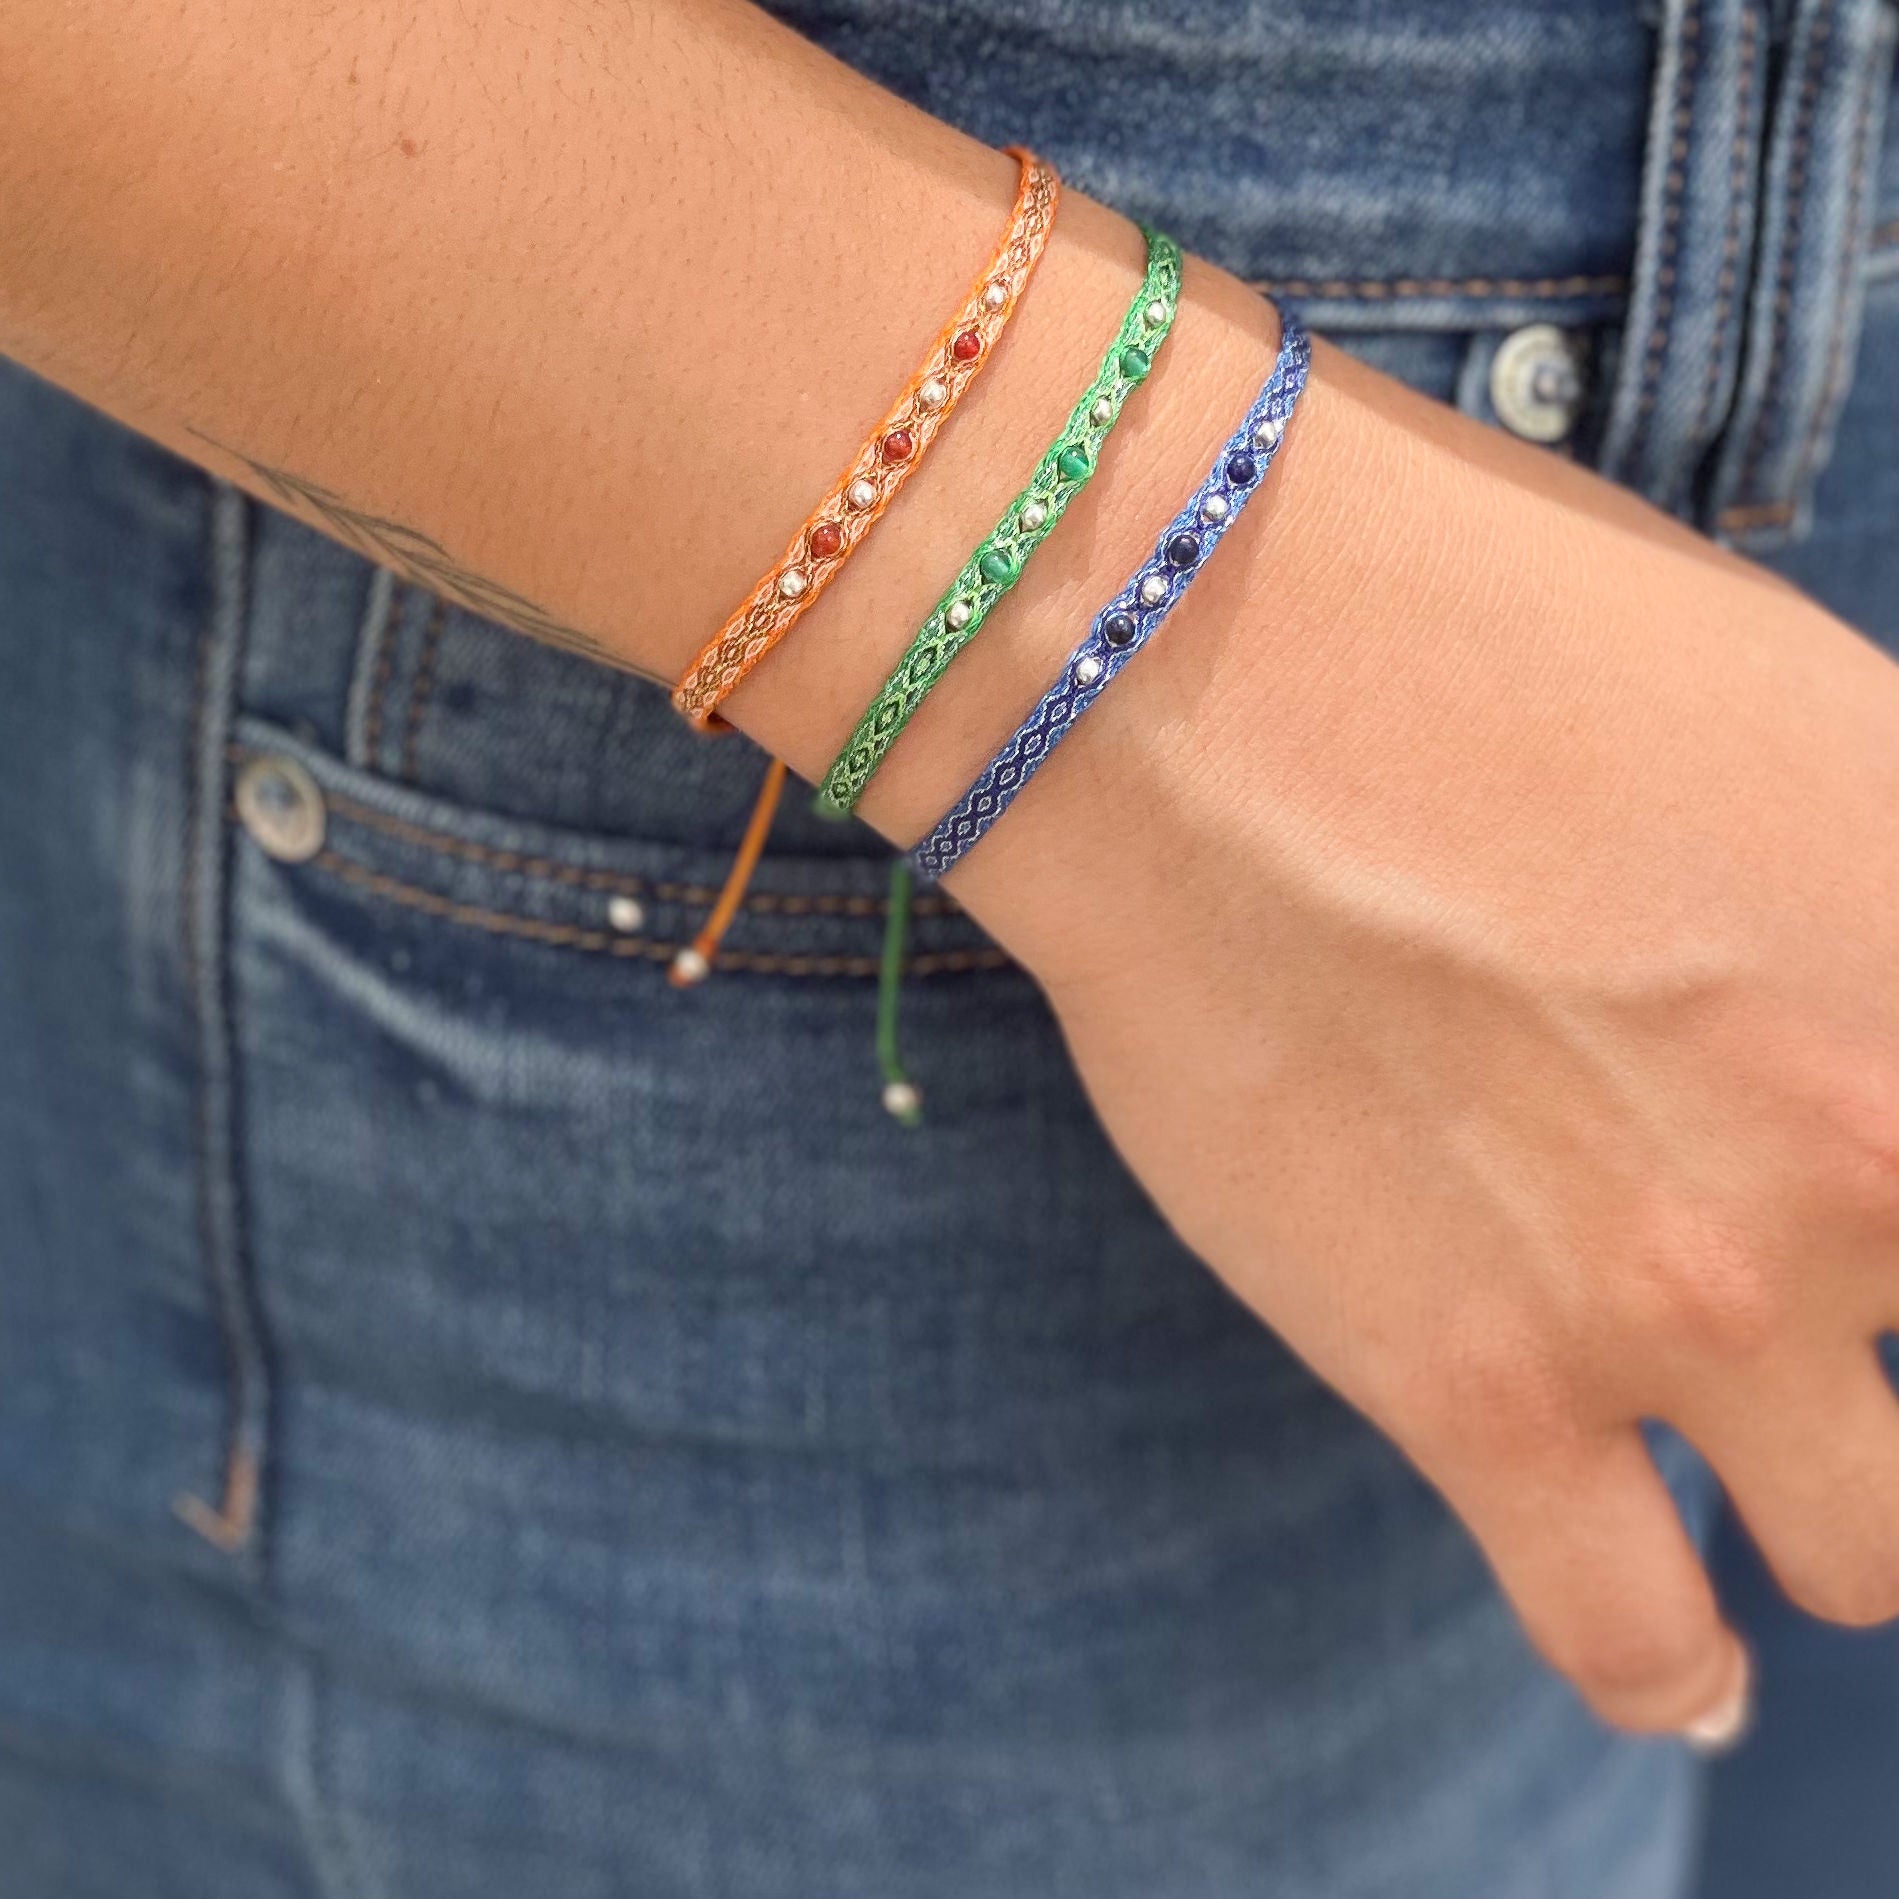 Egyptian Loom Chakra Bracelet, Orange, Green, Indigo with gemstones and silver beads, 40 threads adjustable bracelet